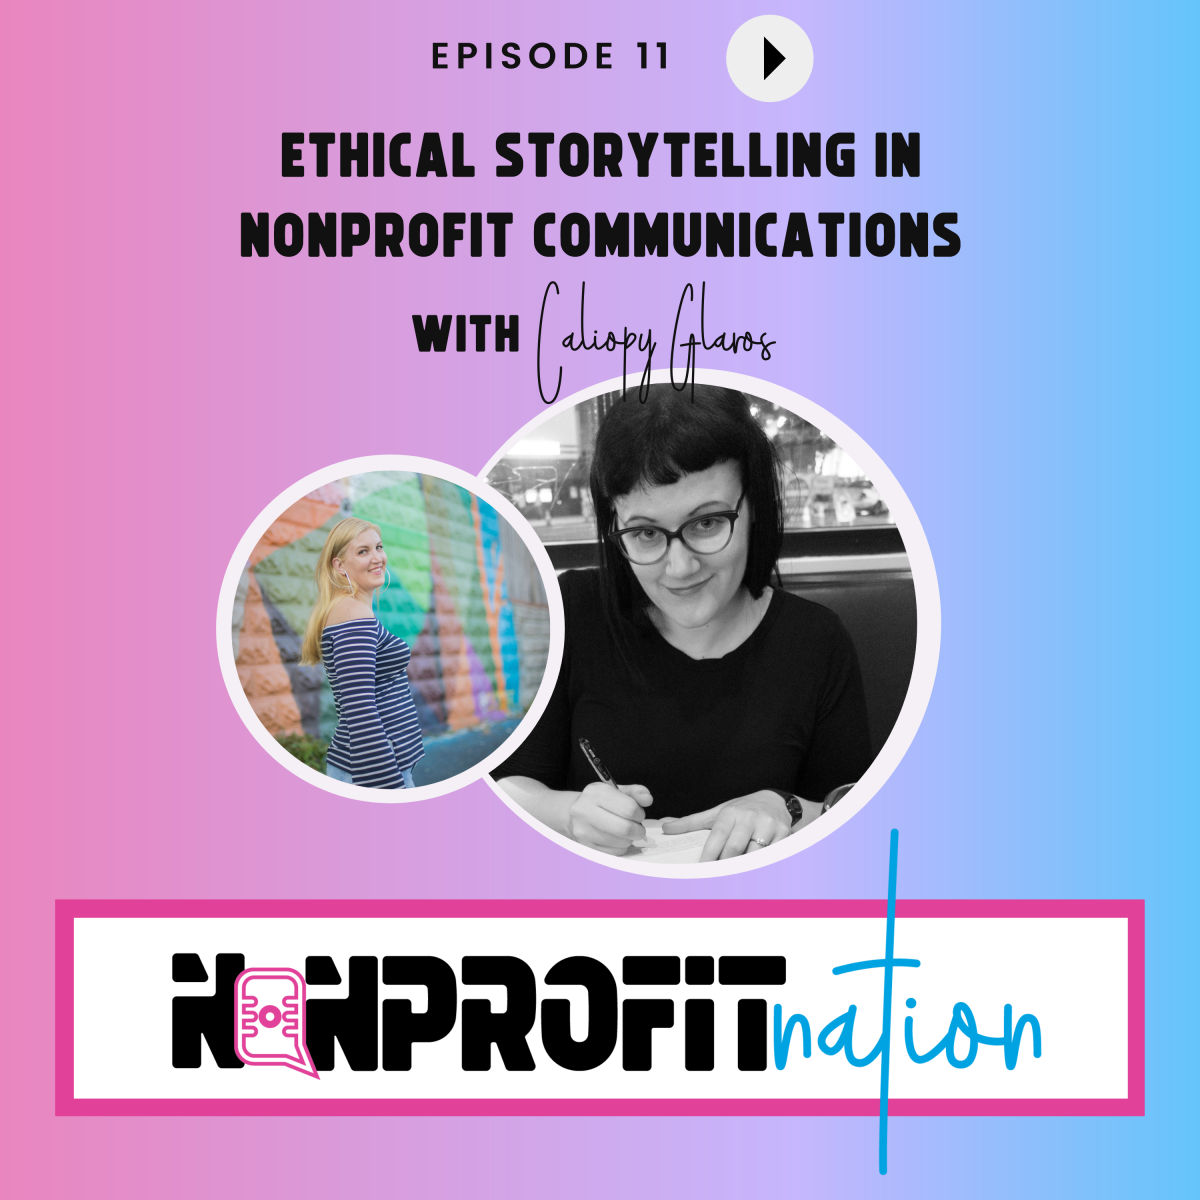 Ethical Storytelling in Nonprofit Communications with Caliopy Glaros